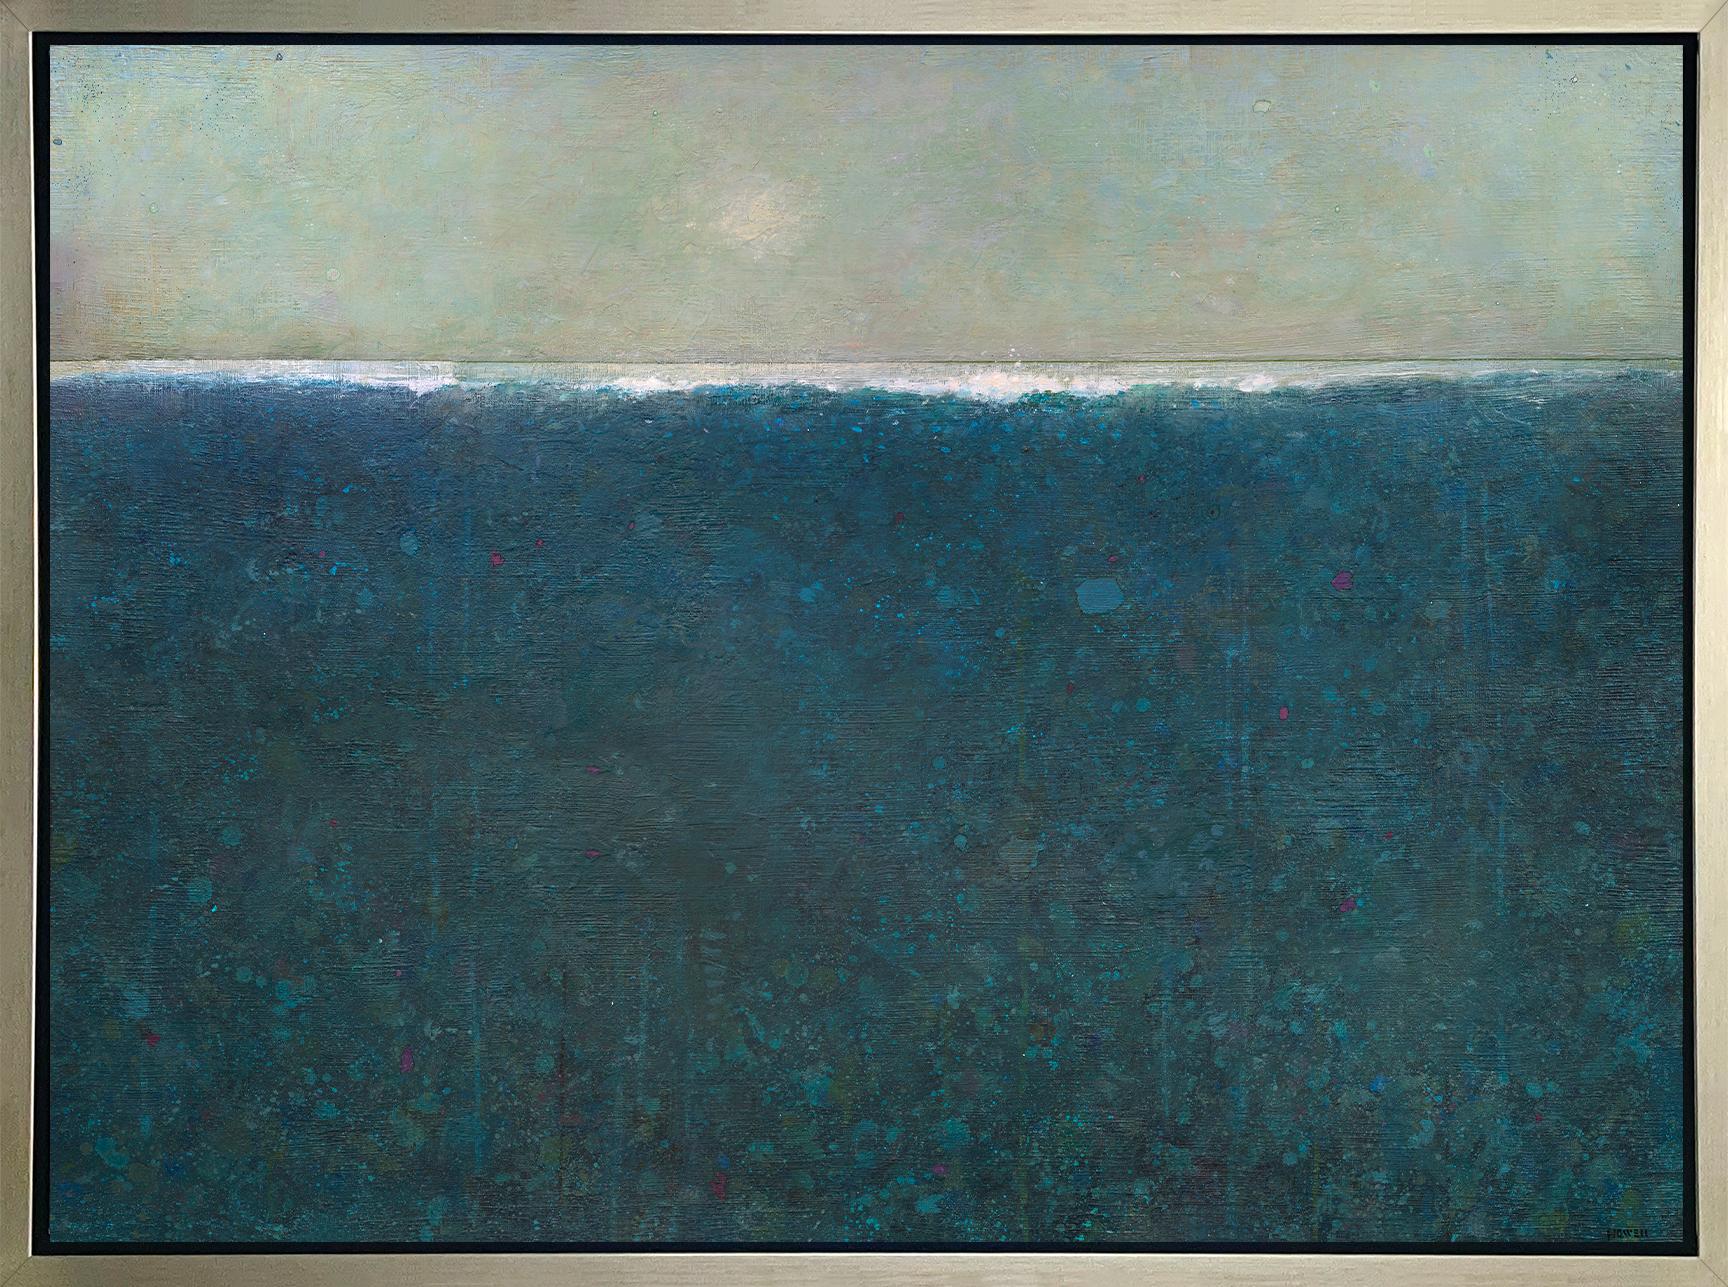 Abstract Print Elwood Howell - "Ocean,"" Tirage giclée en édition limitée, 45"" x 60"